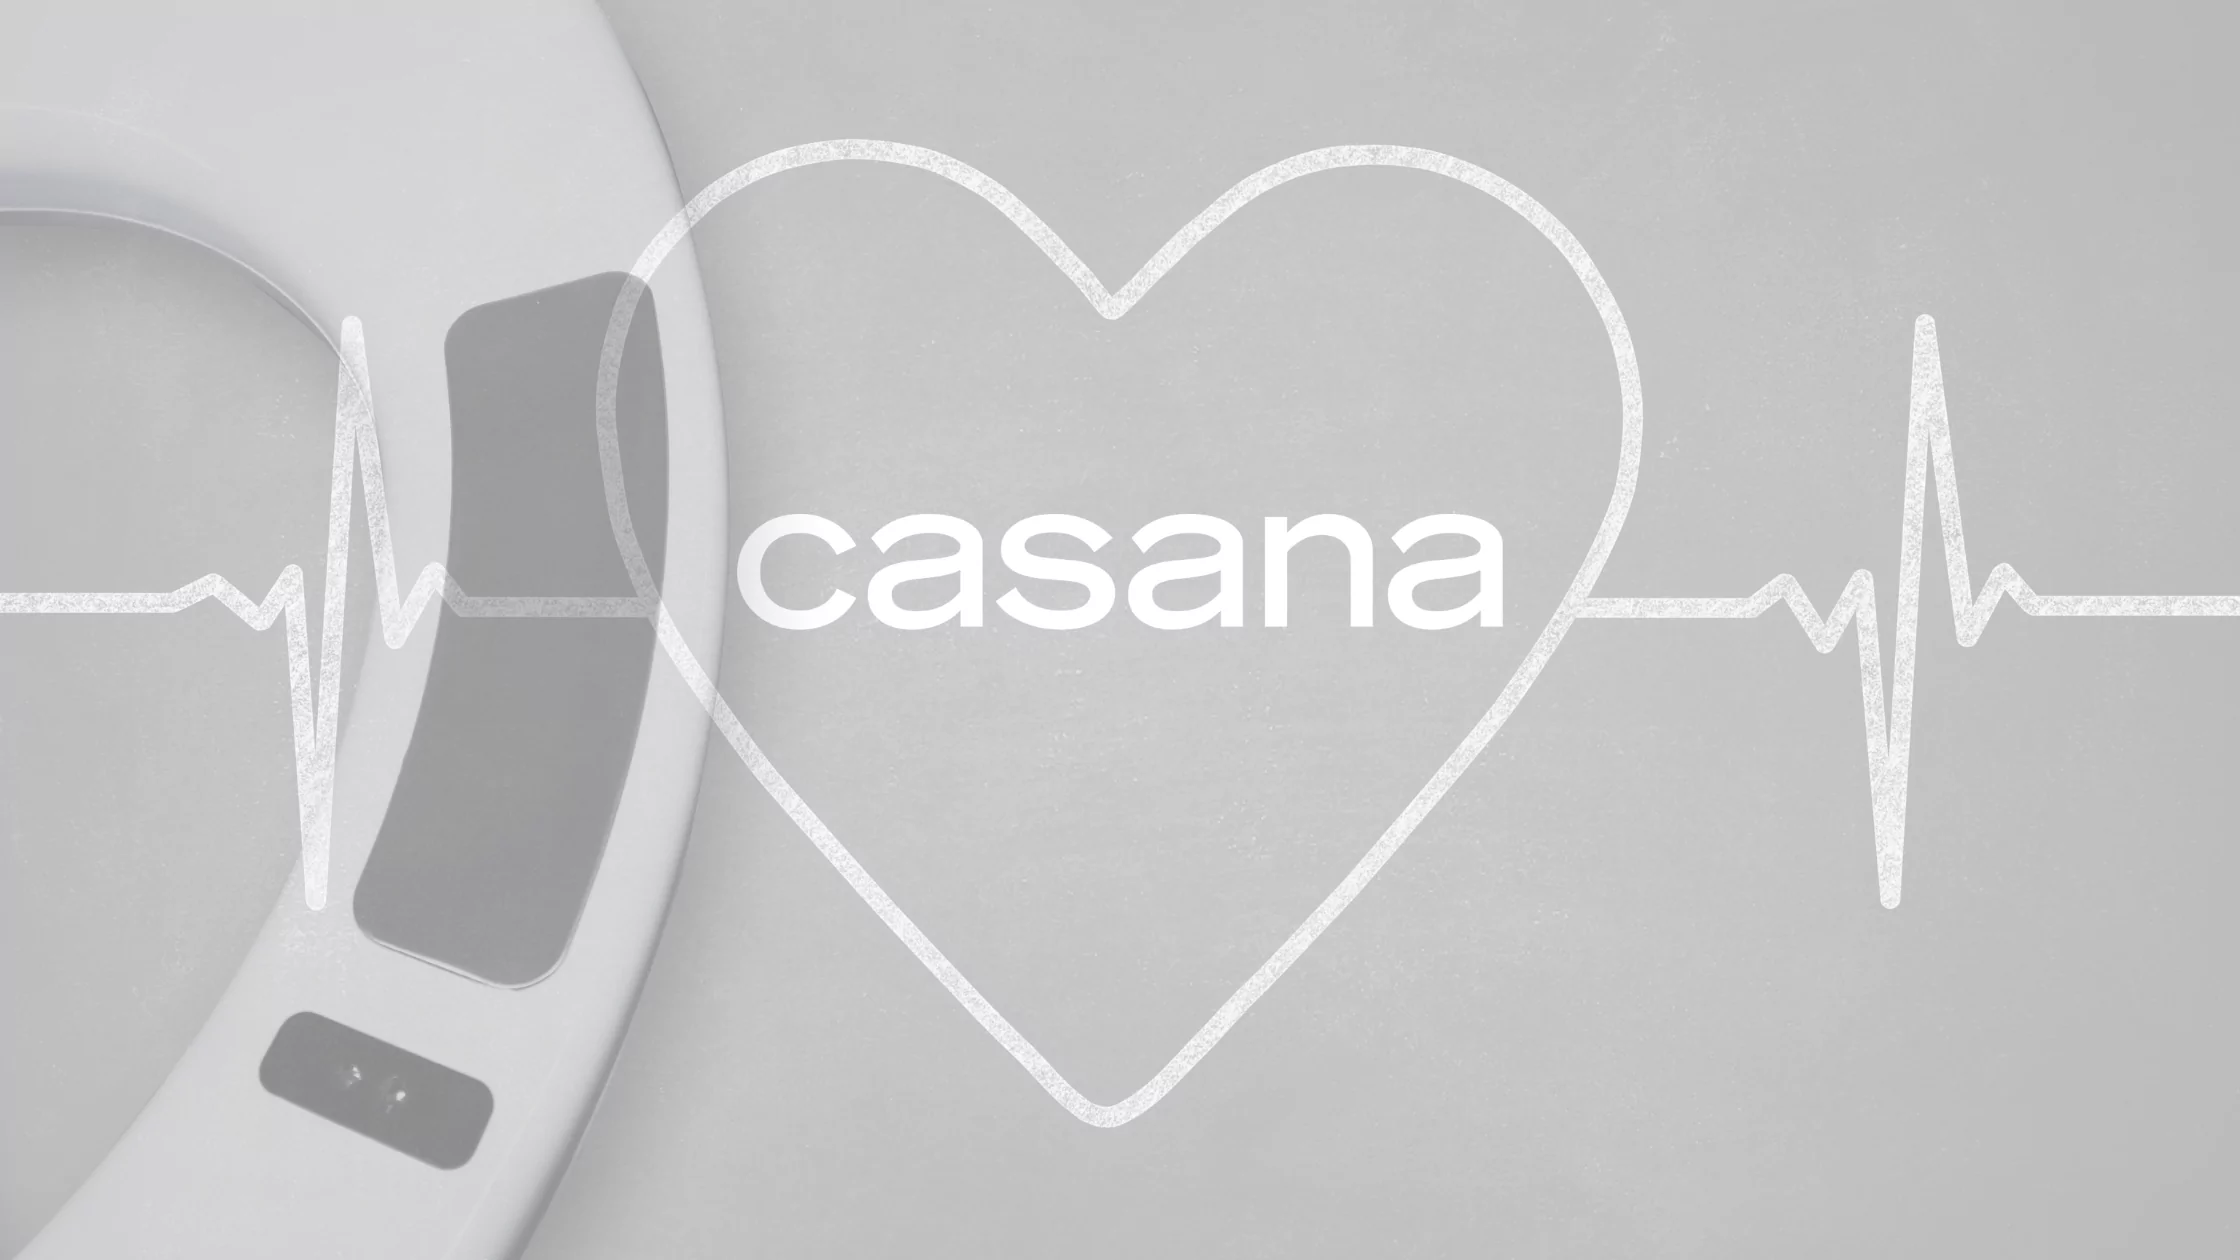 casana article image - toilet sensor and heartbeat logo